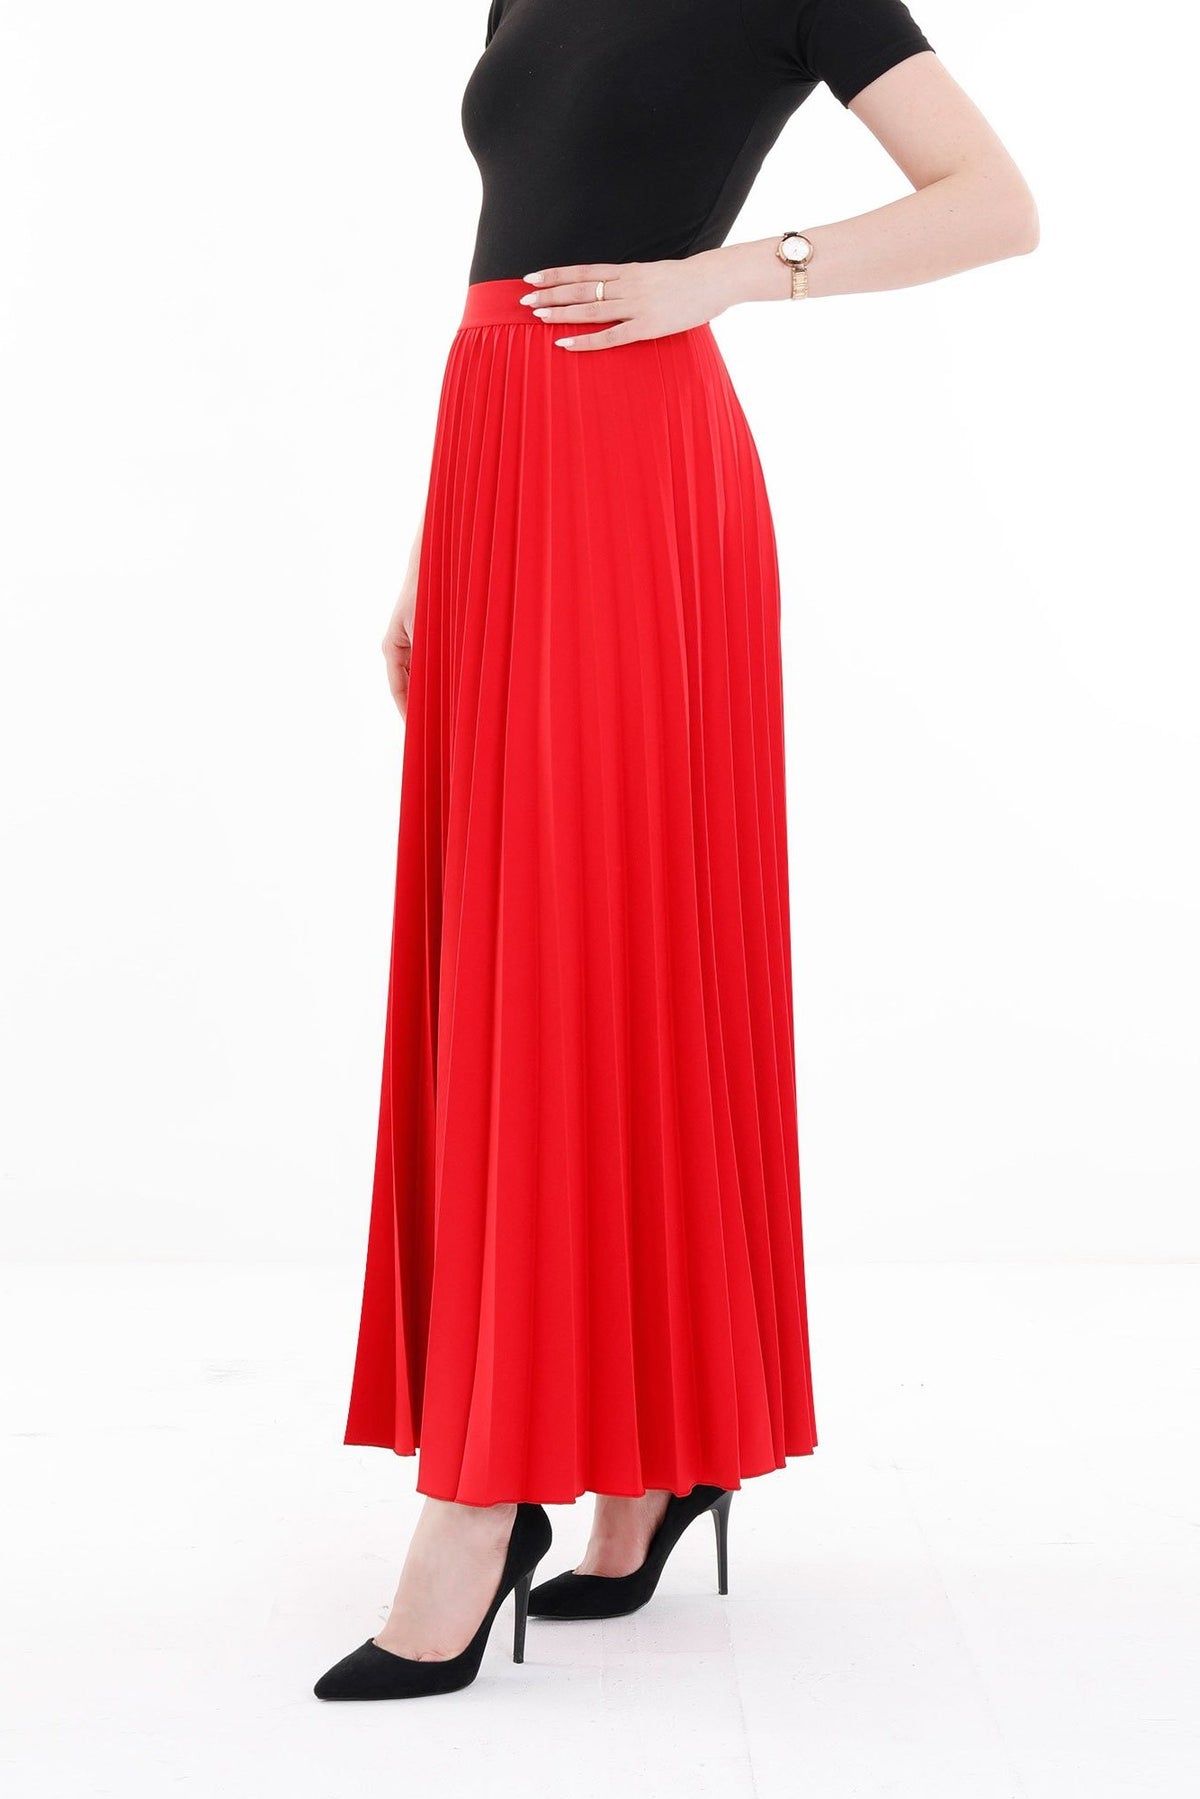 Red Pleated Maxi Skirt Elastic Waist Band Ankle Length Skirt G-Line